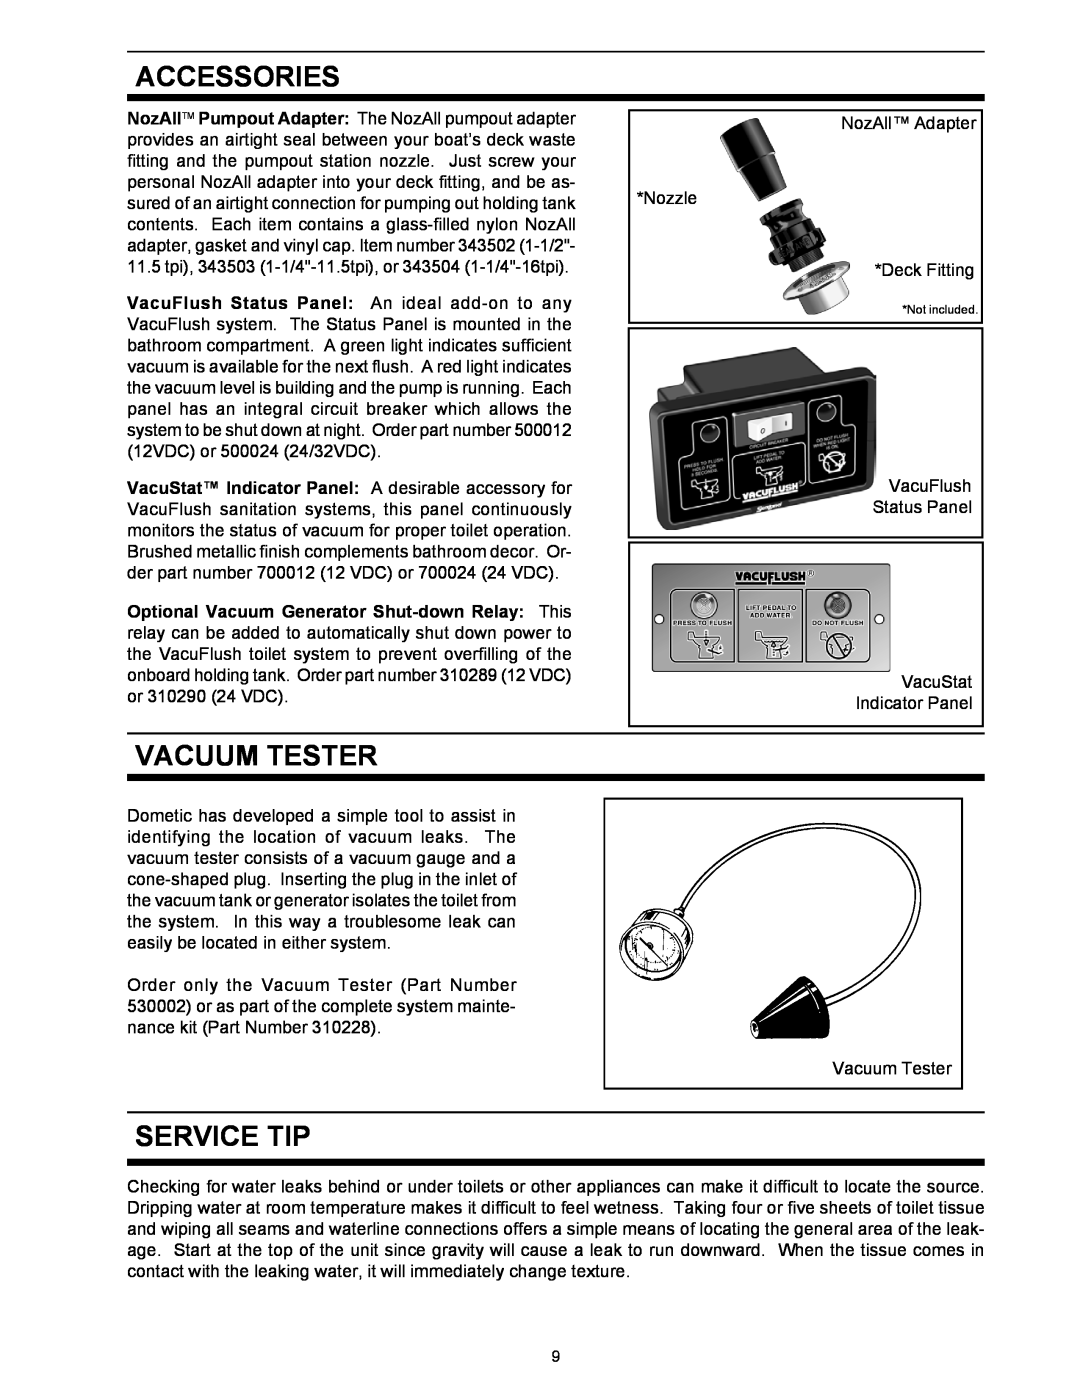 Dometic 1000 Series, 500Plus Series owner manual Accessories, Vacuum Tester, Service Tip 